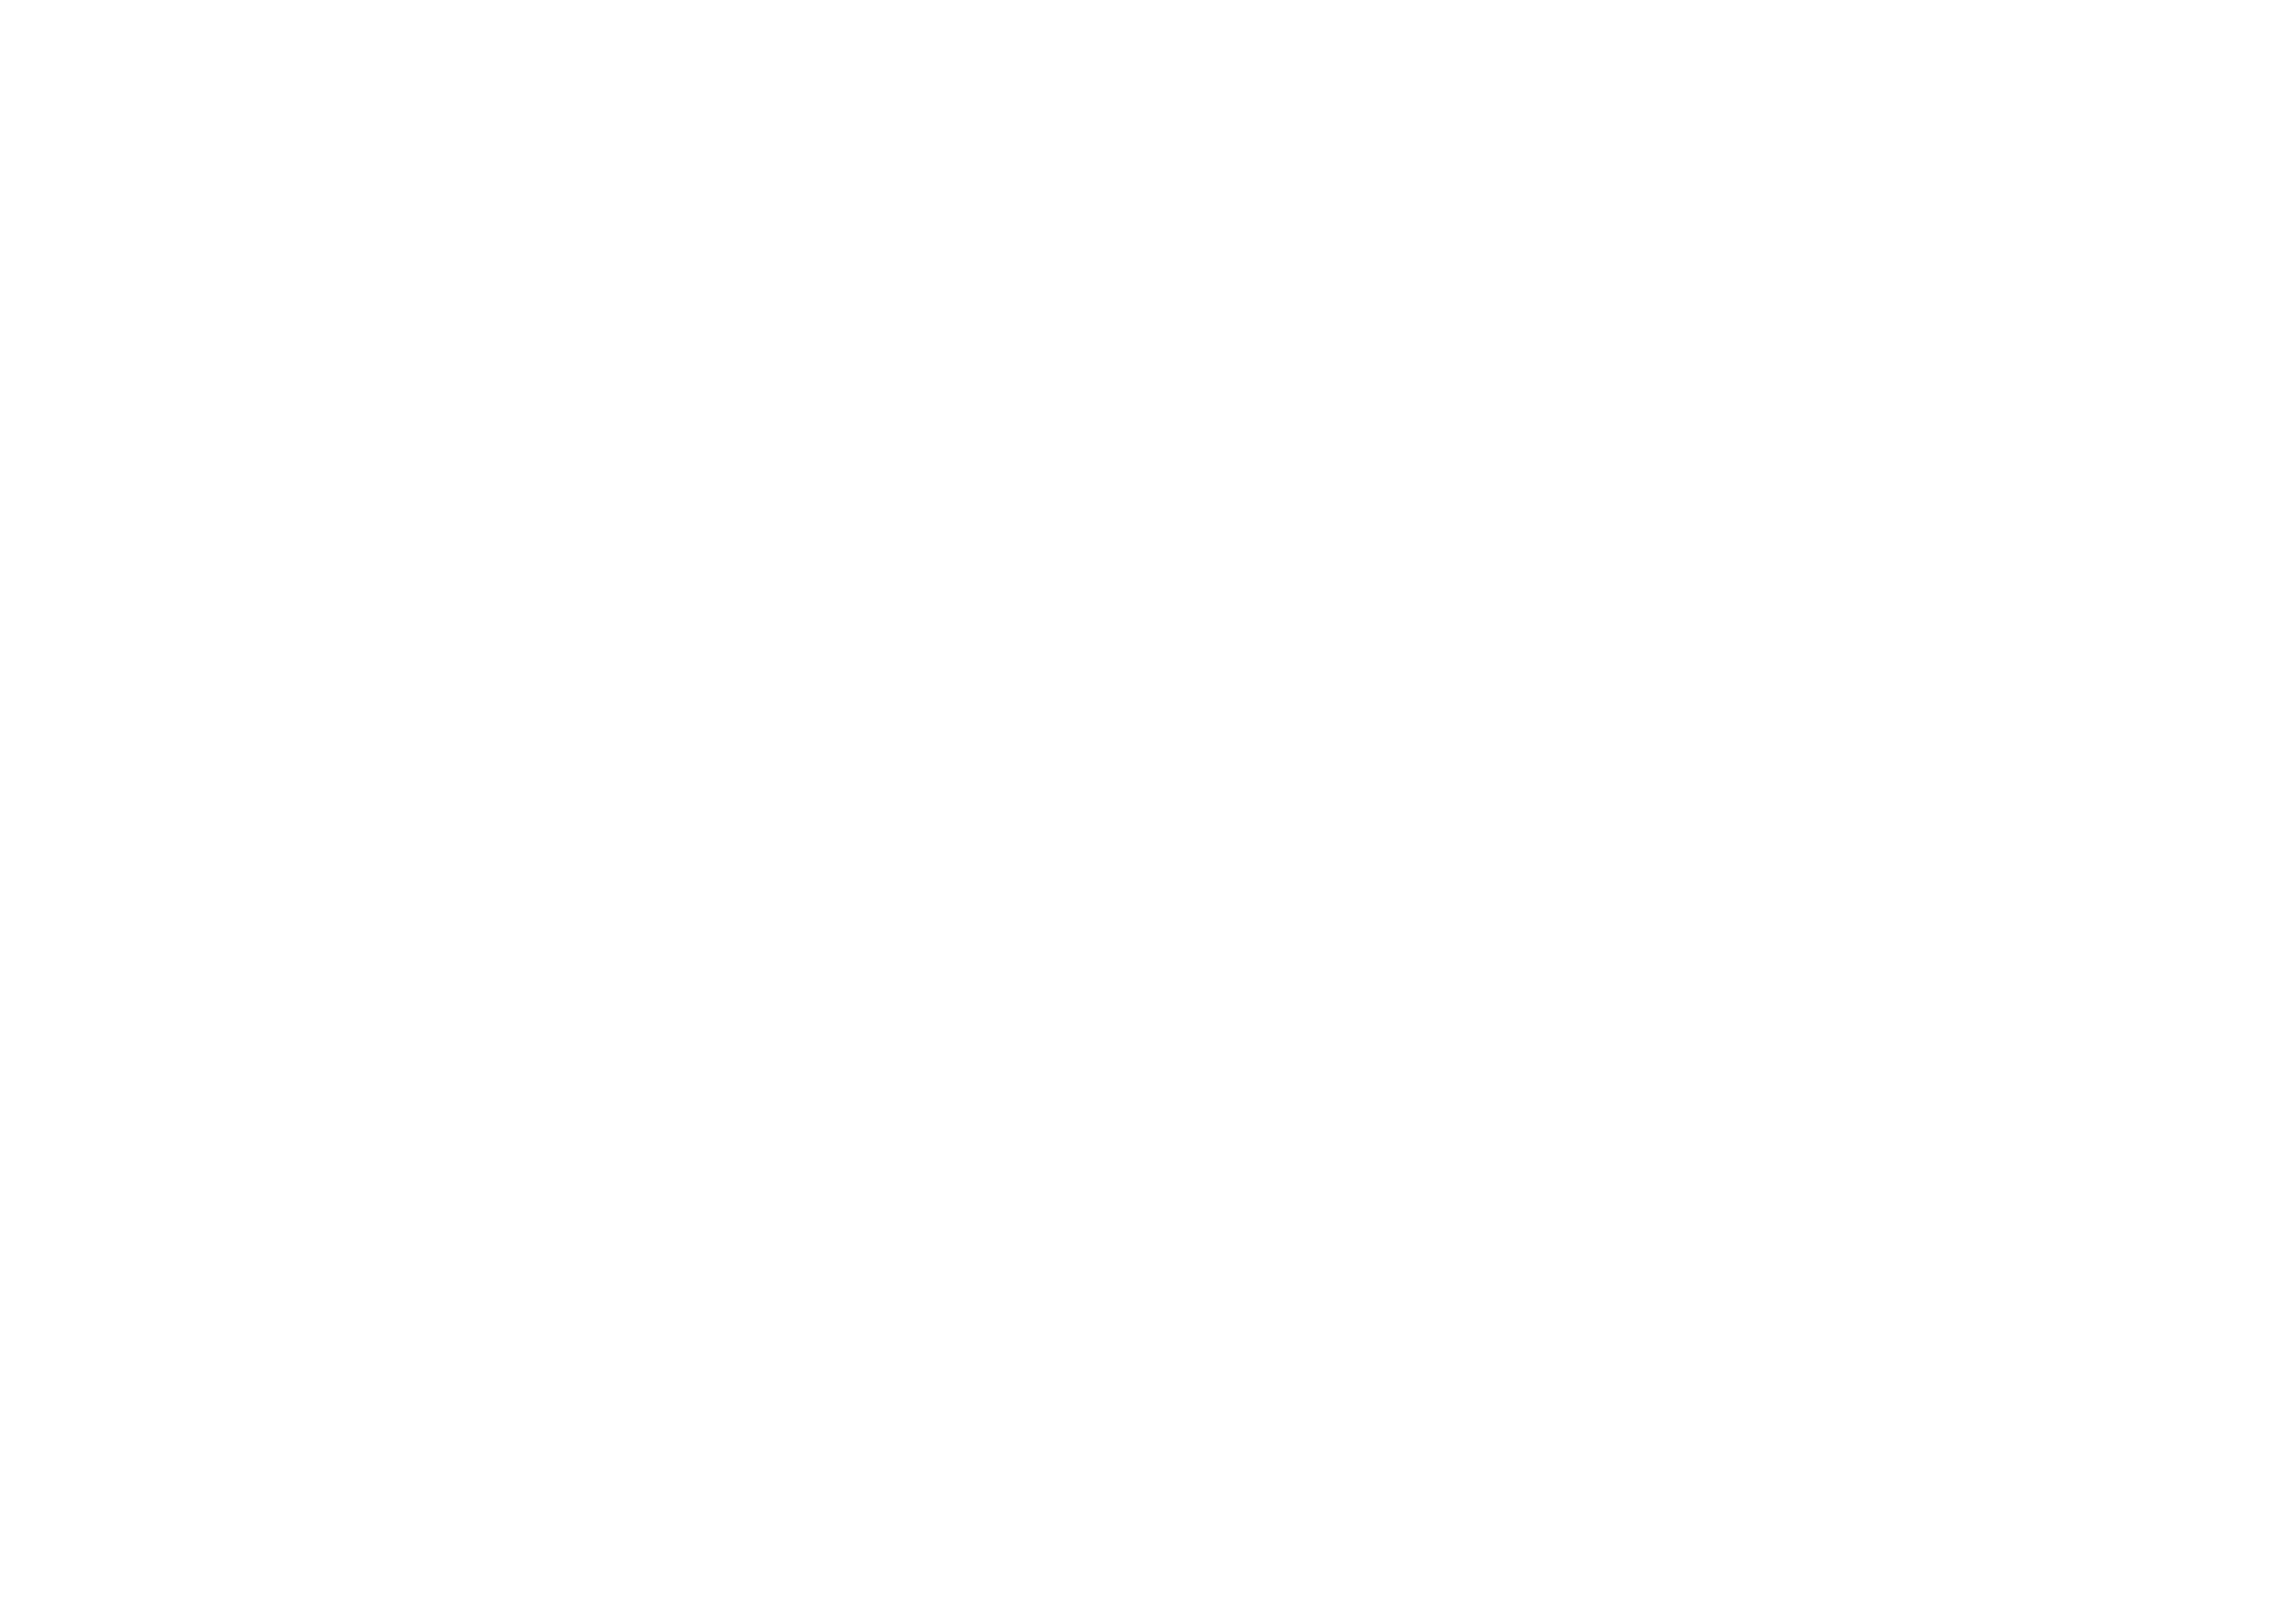 AYSWAP